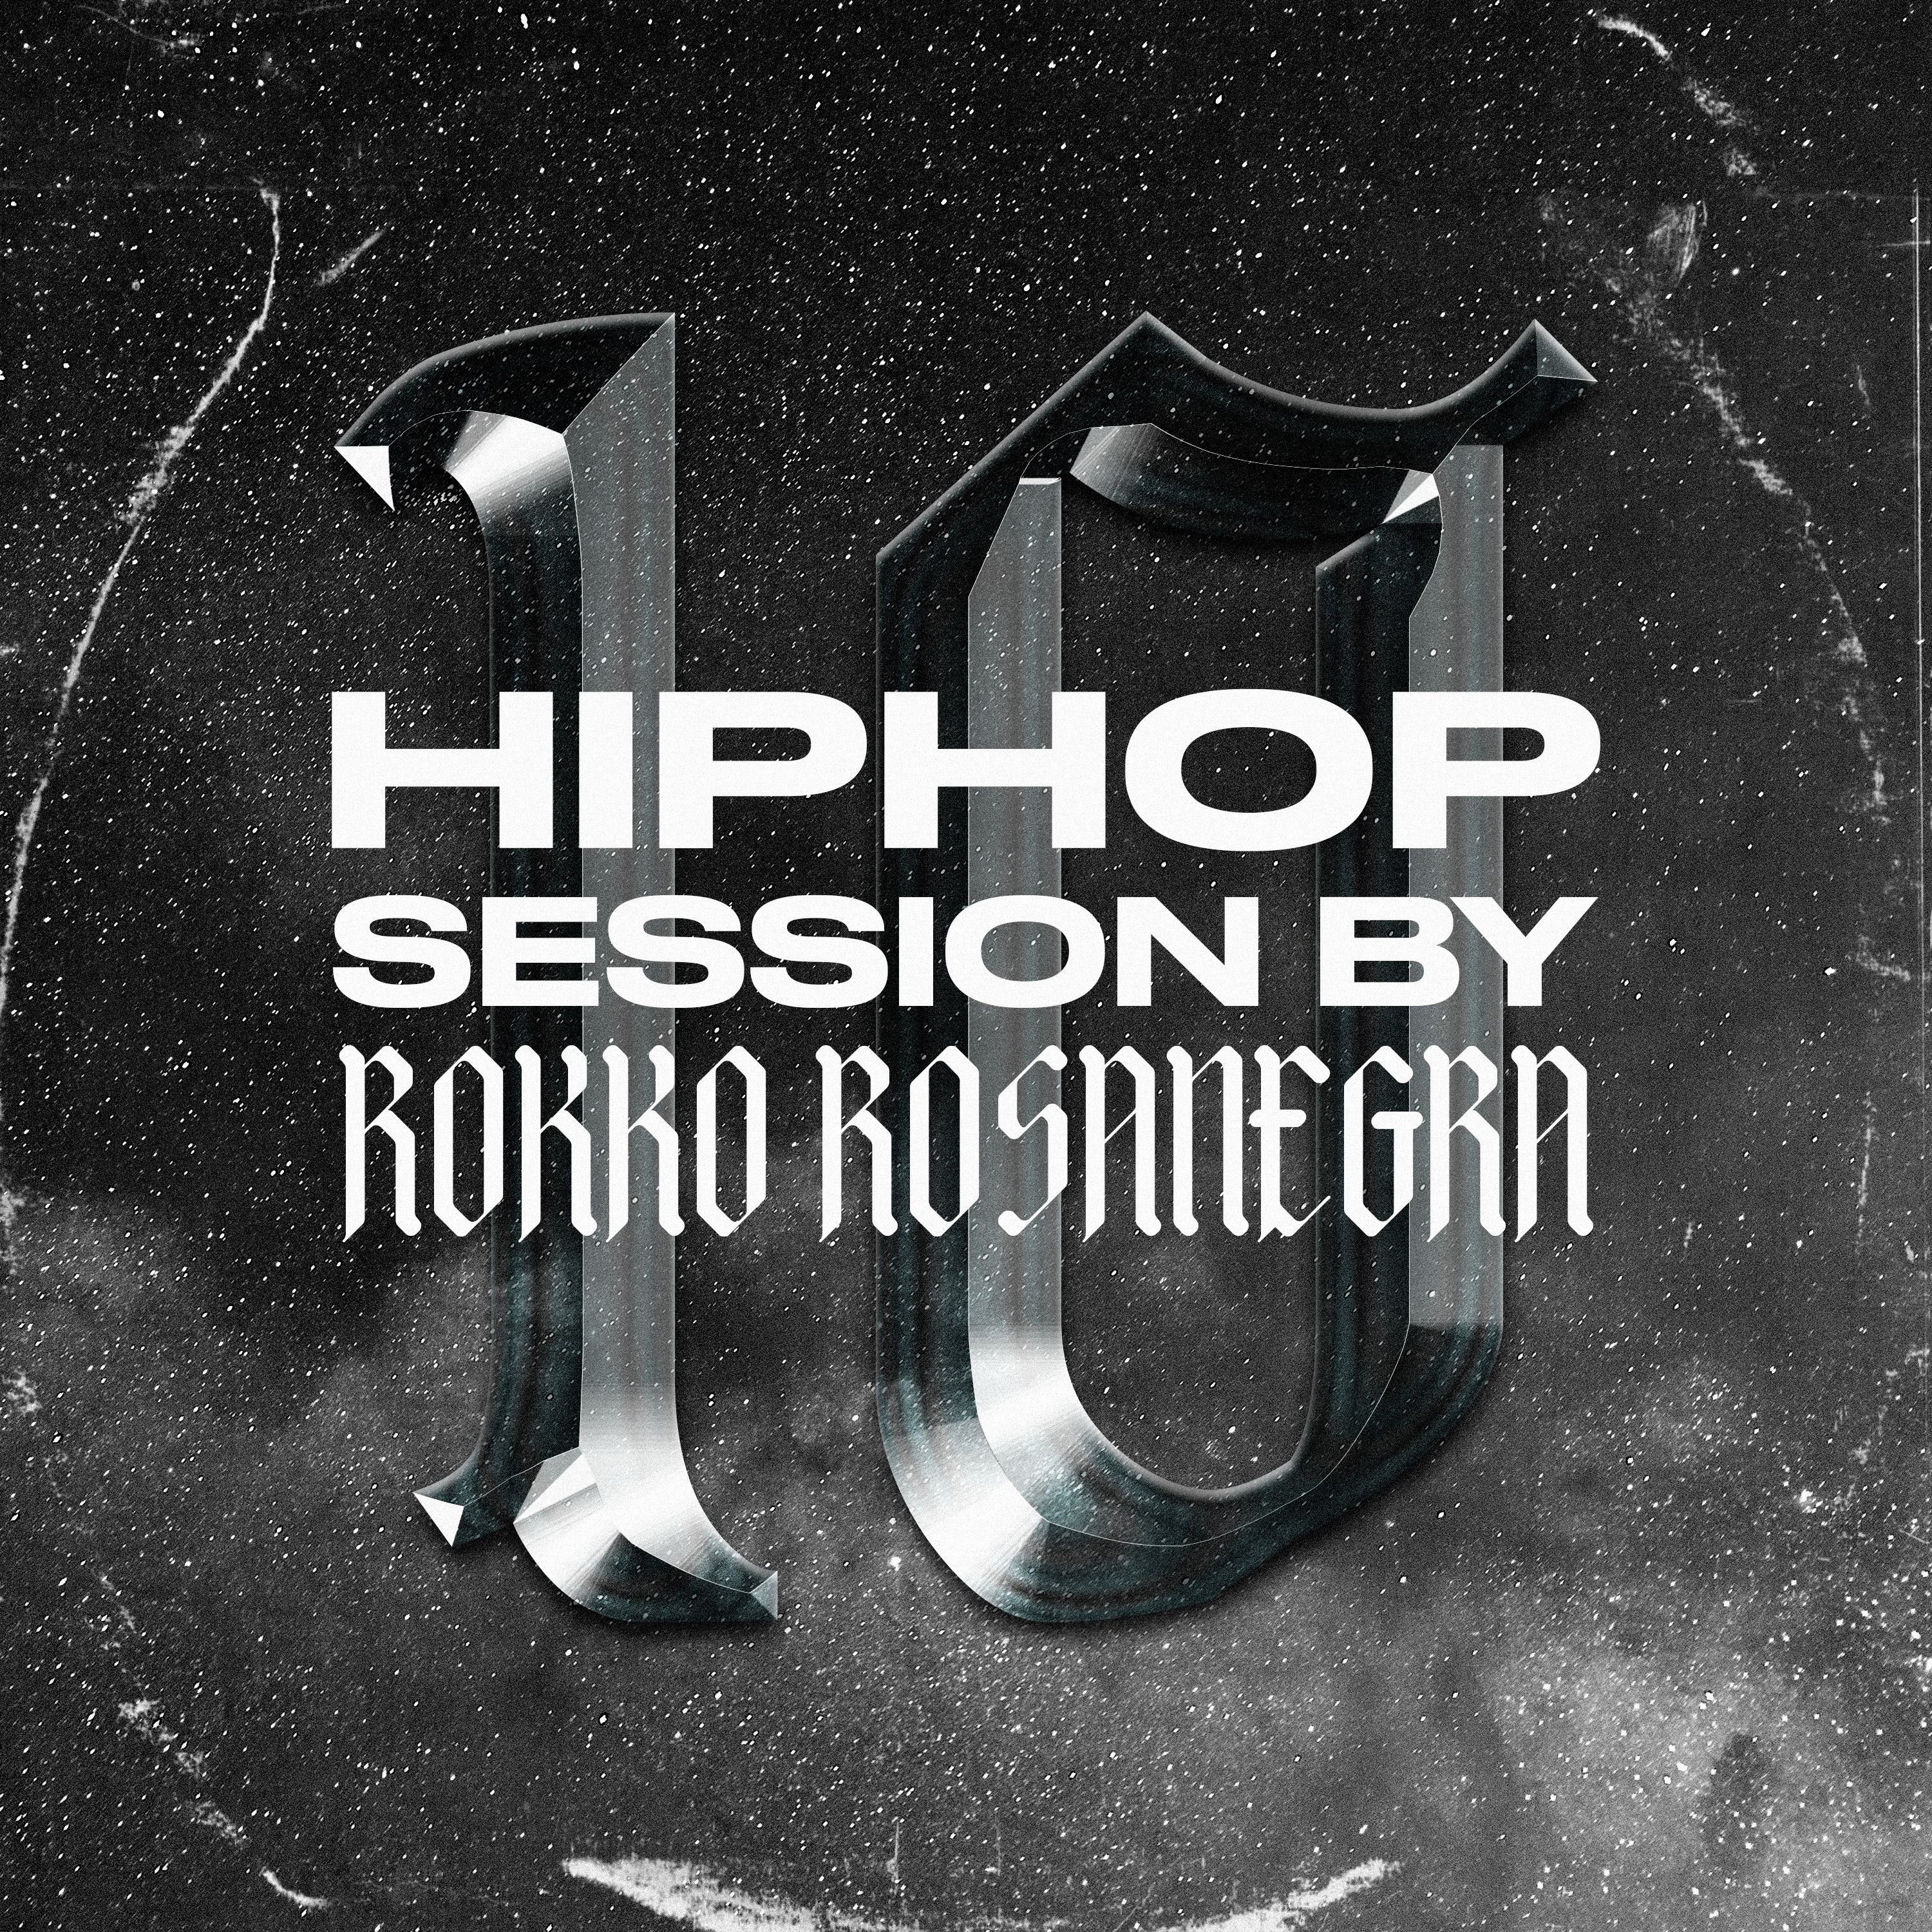 Hent HIP HOP SESSION 10 (DJ ROKKO ROSANEGRA)